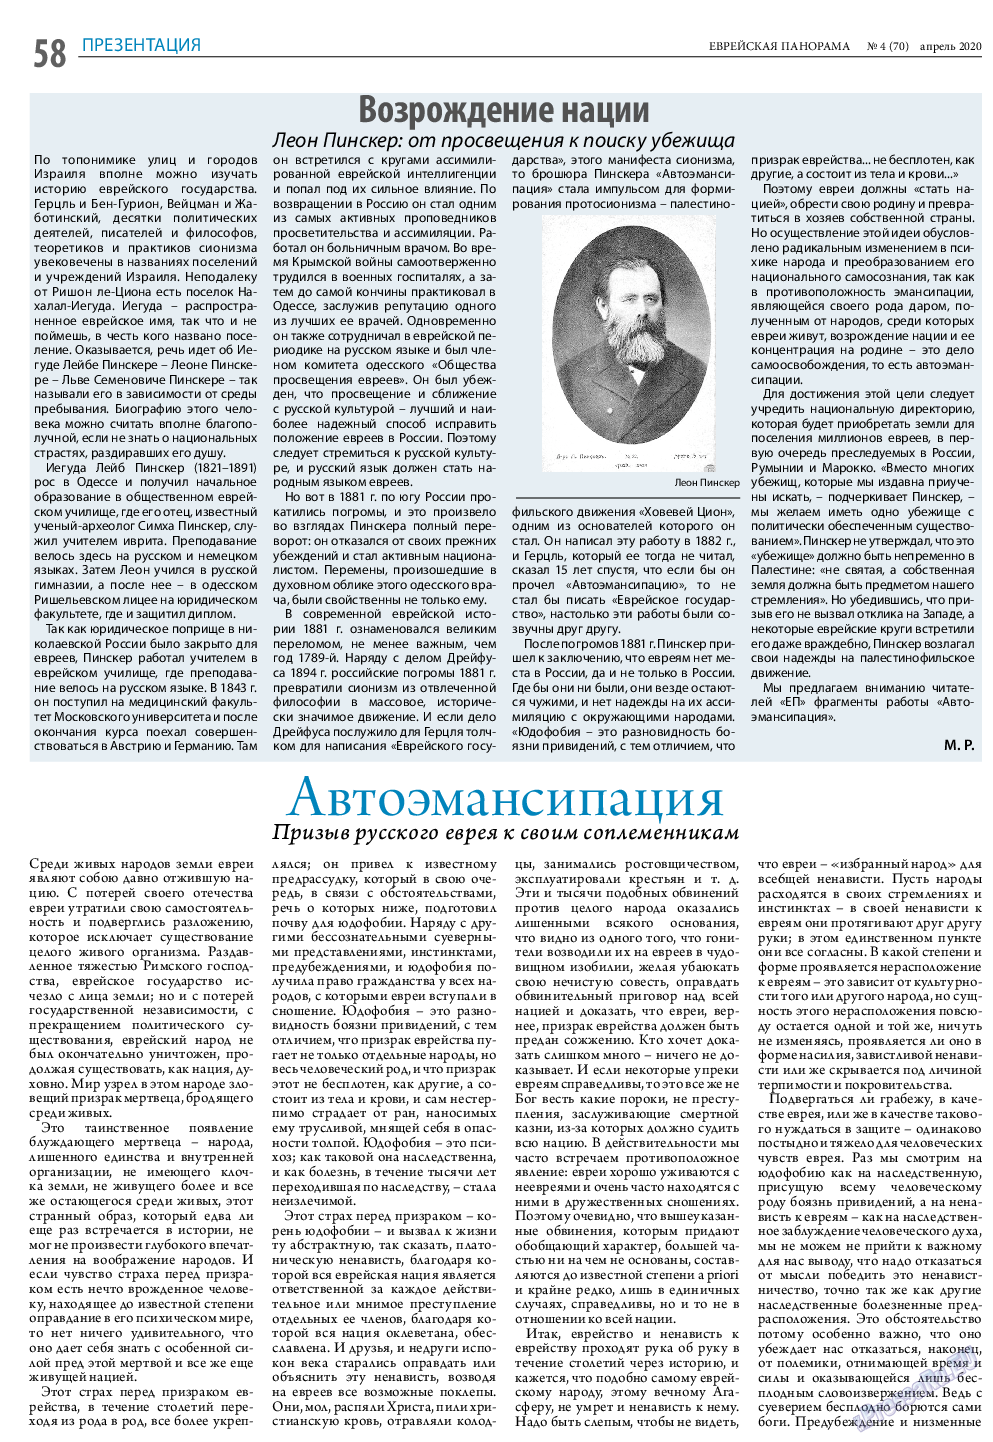 Еврейская панорама, газета. 2020 №4 стр.58